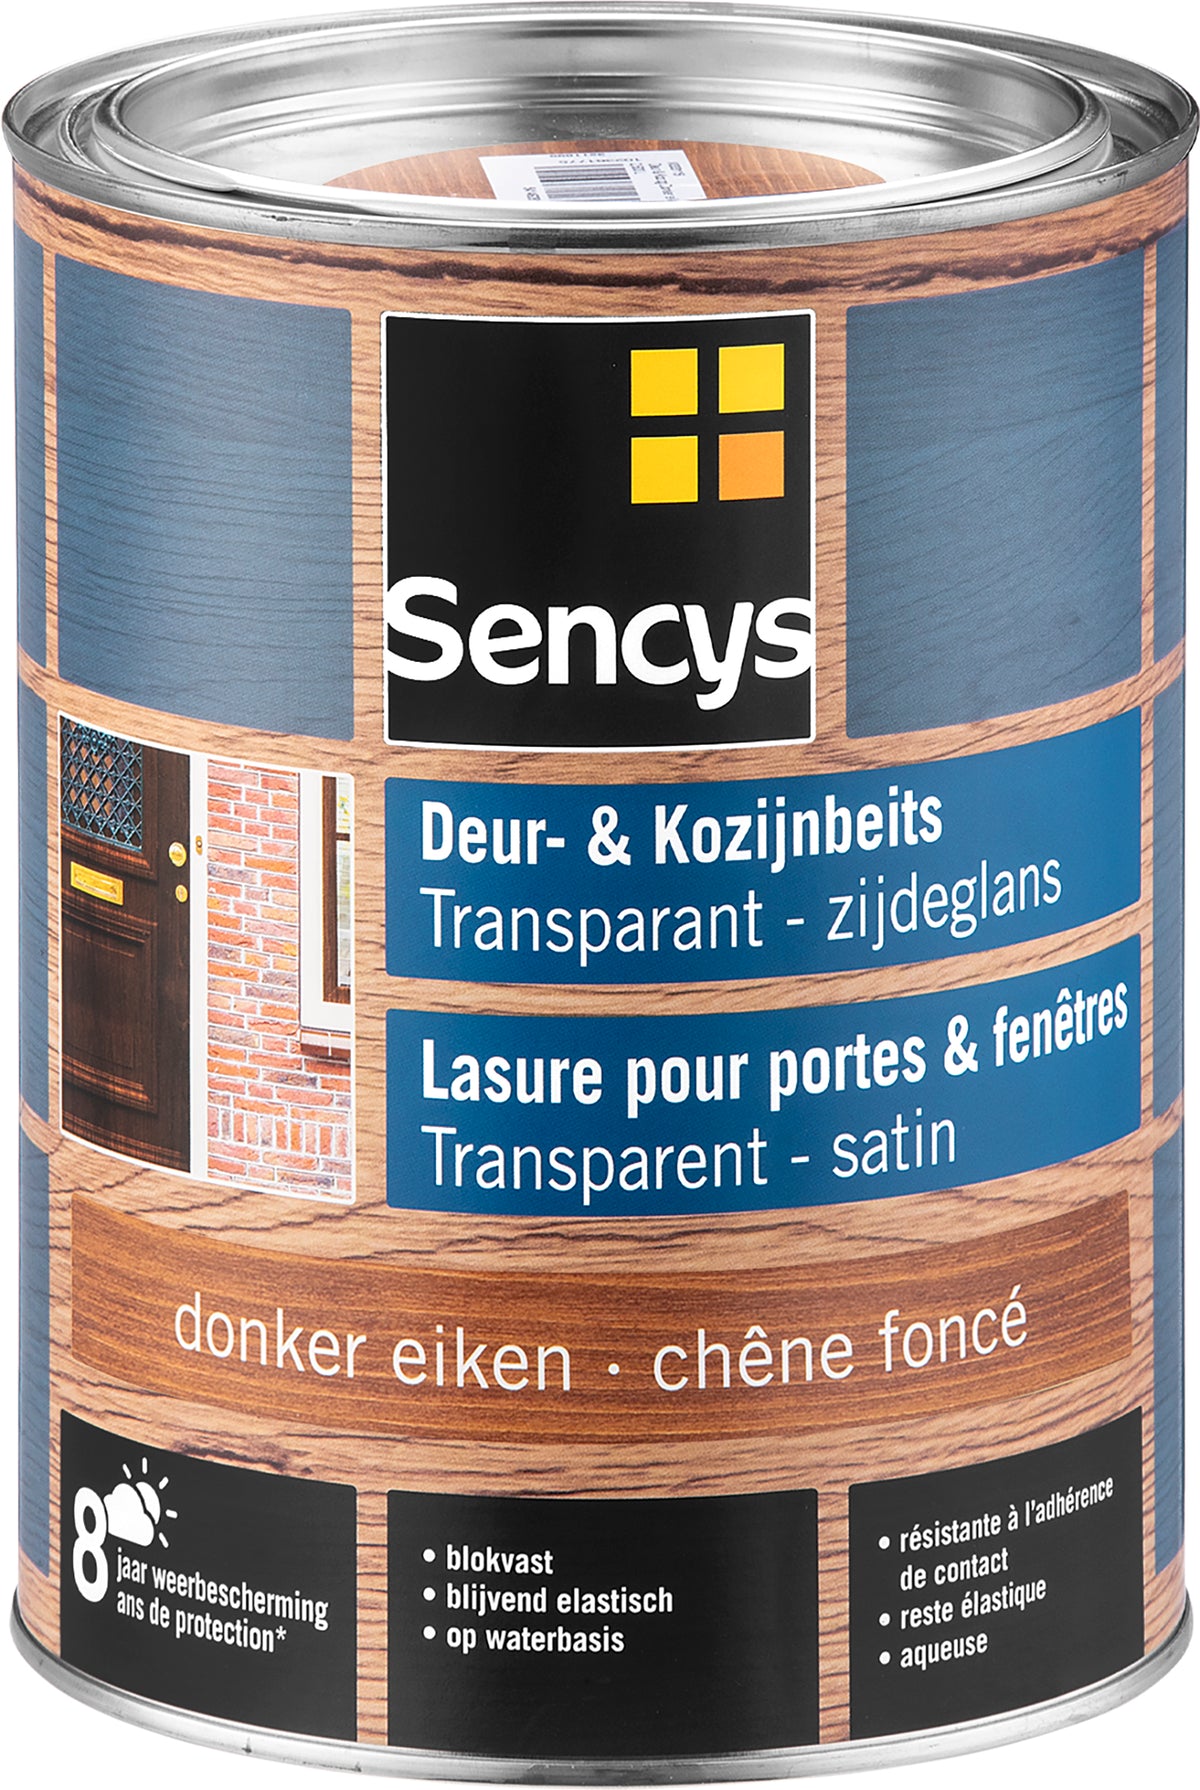 Sencys beits ramen en deuren semi-transparant zijdeglans donker eiken 2,5L